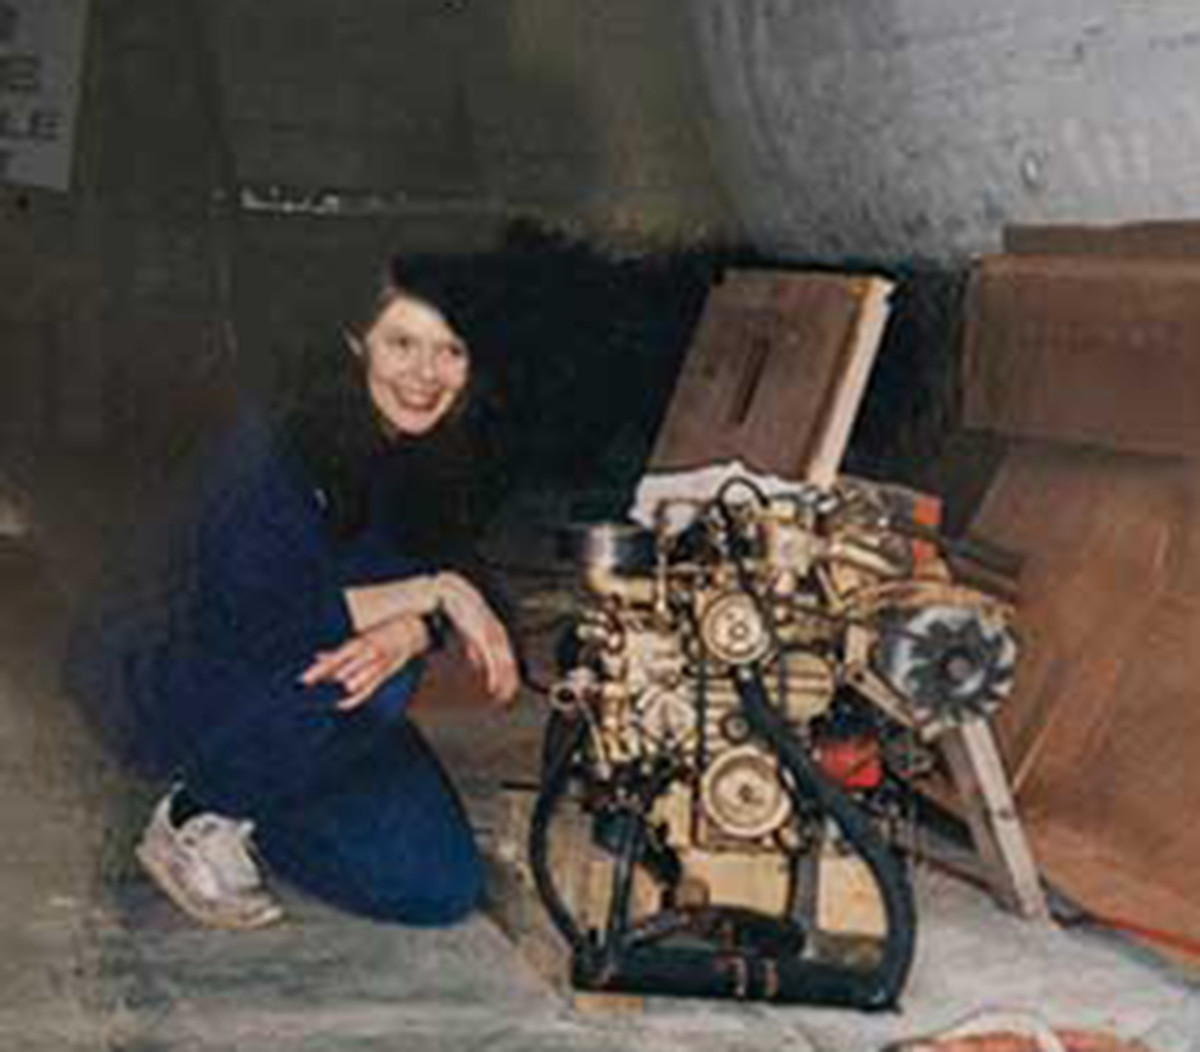 A Universal diesel was installed in 1993. 